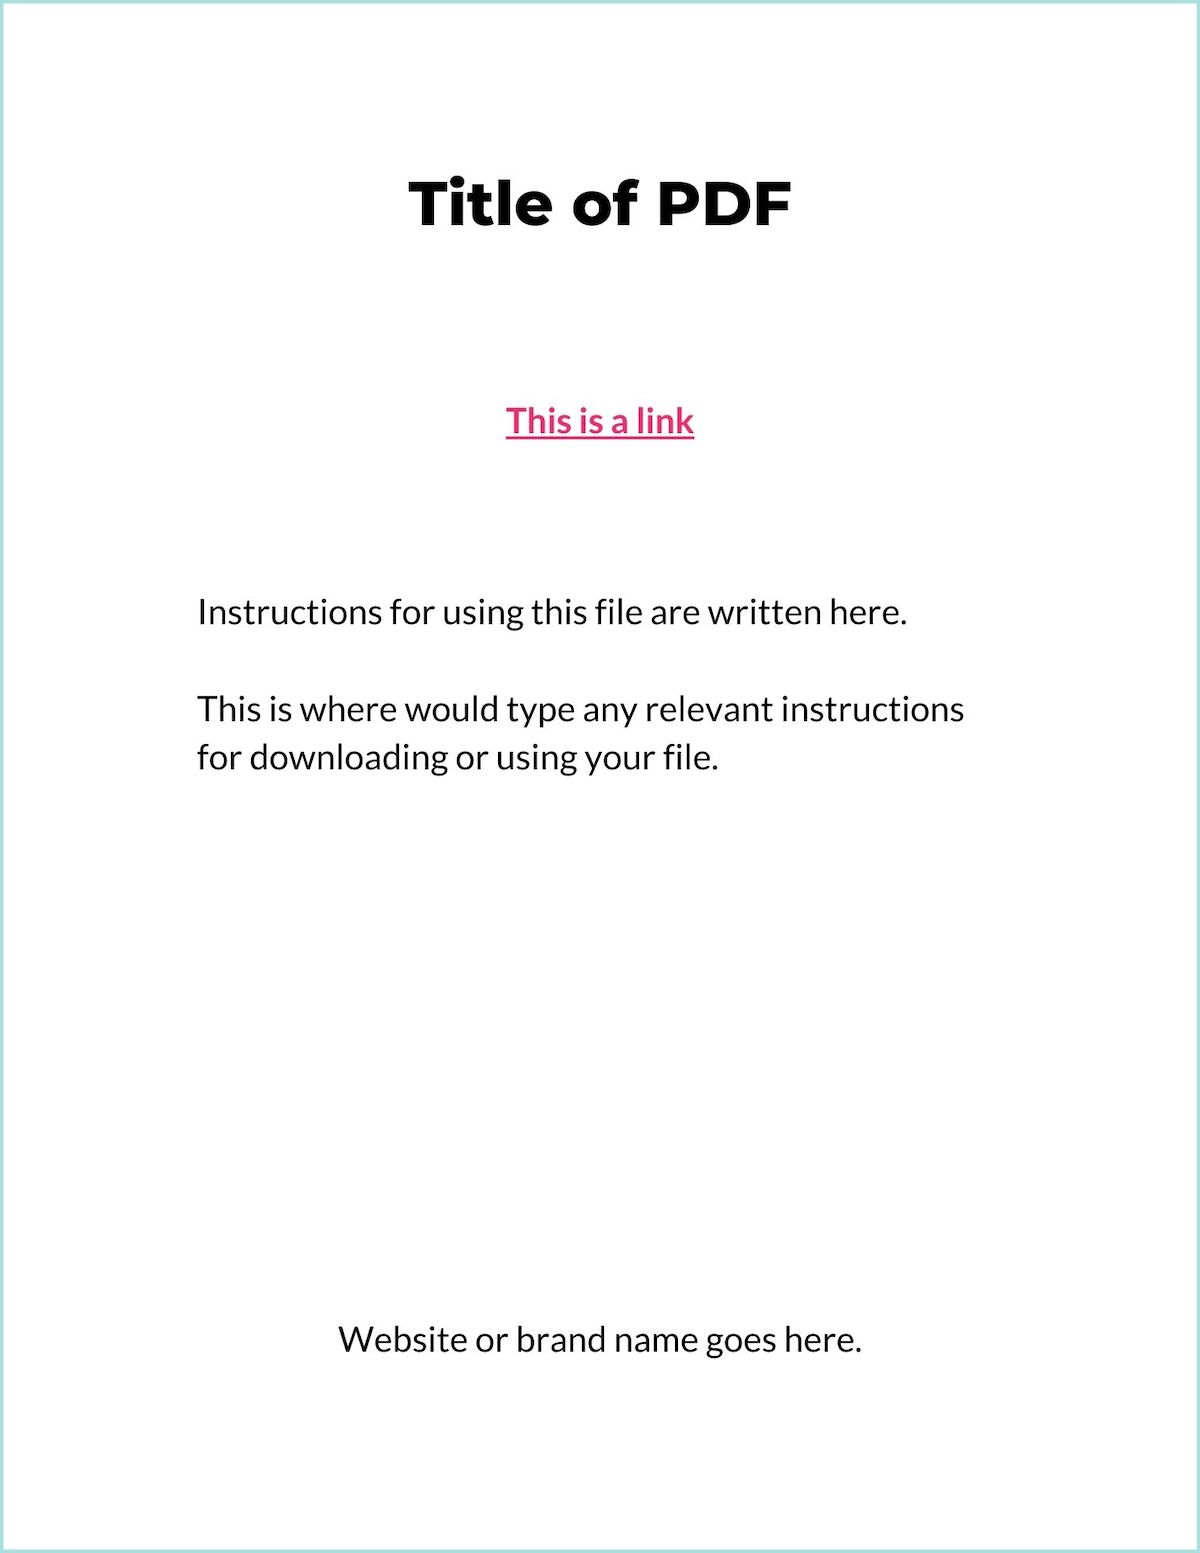 generic PDF for selling Etsy digital downloads